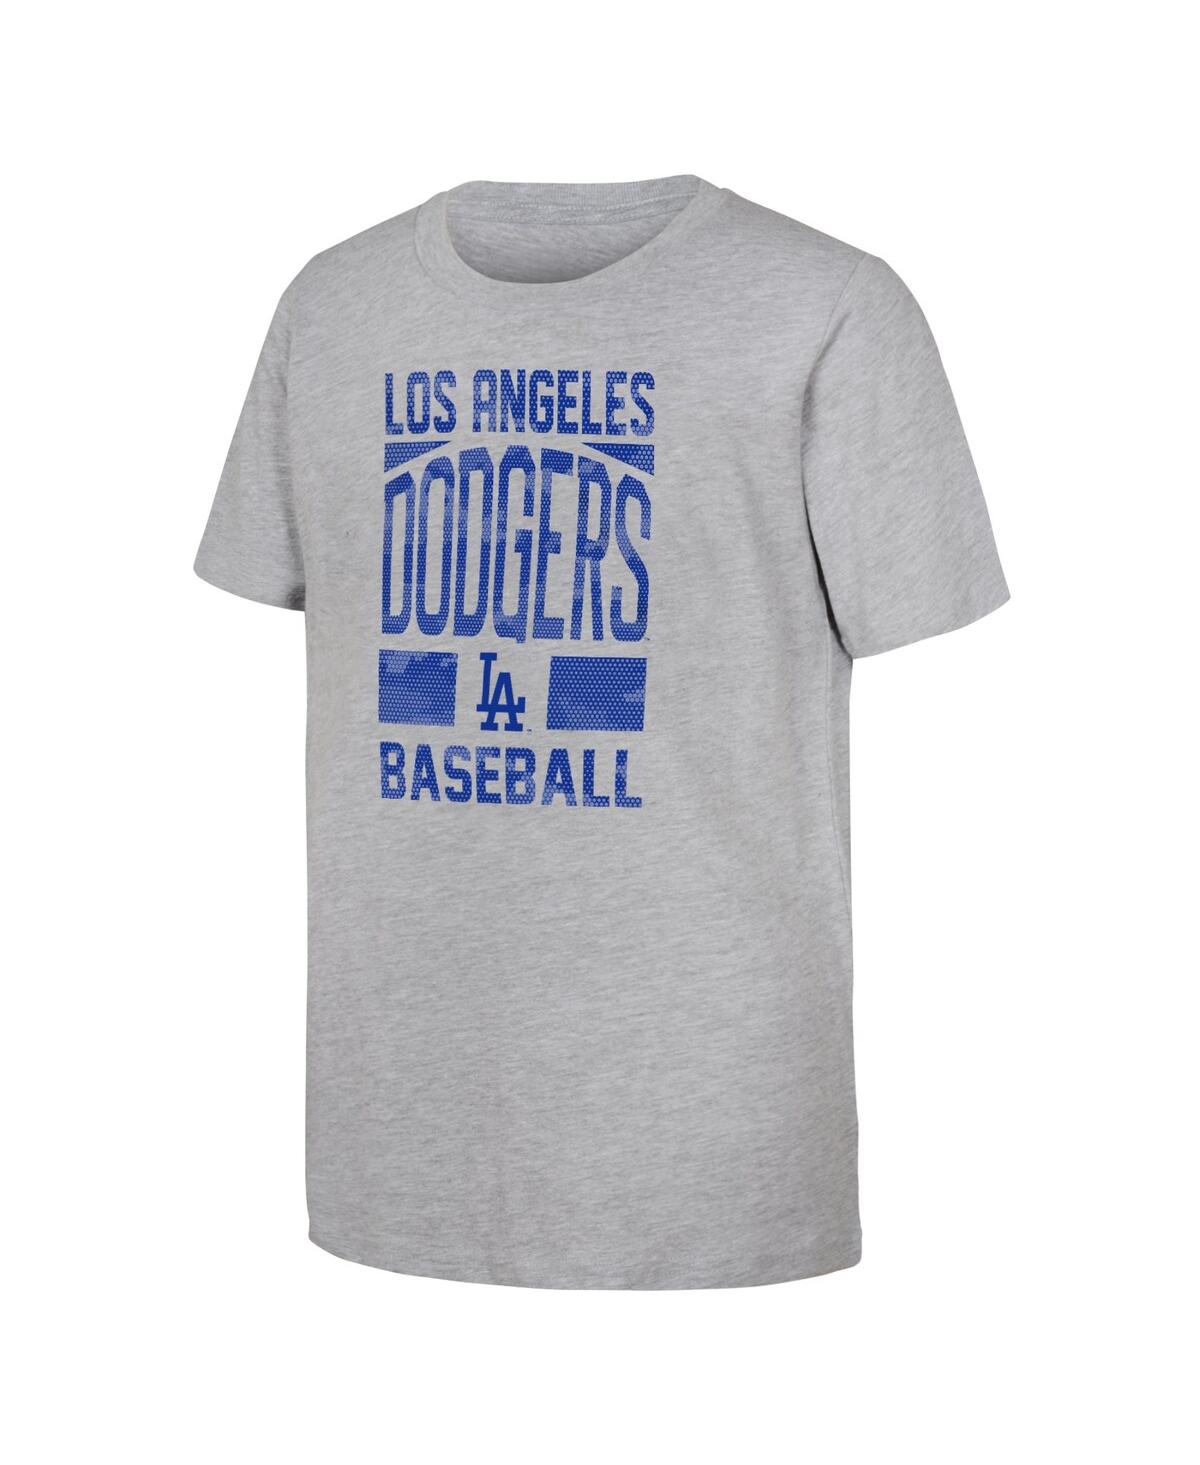 Outerstuff Kids' Big Boys Fanatics Heather Gray Los Angeles Dodgers Season Ticket T-shirt